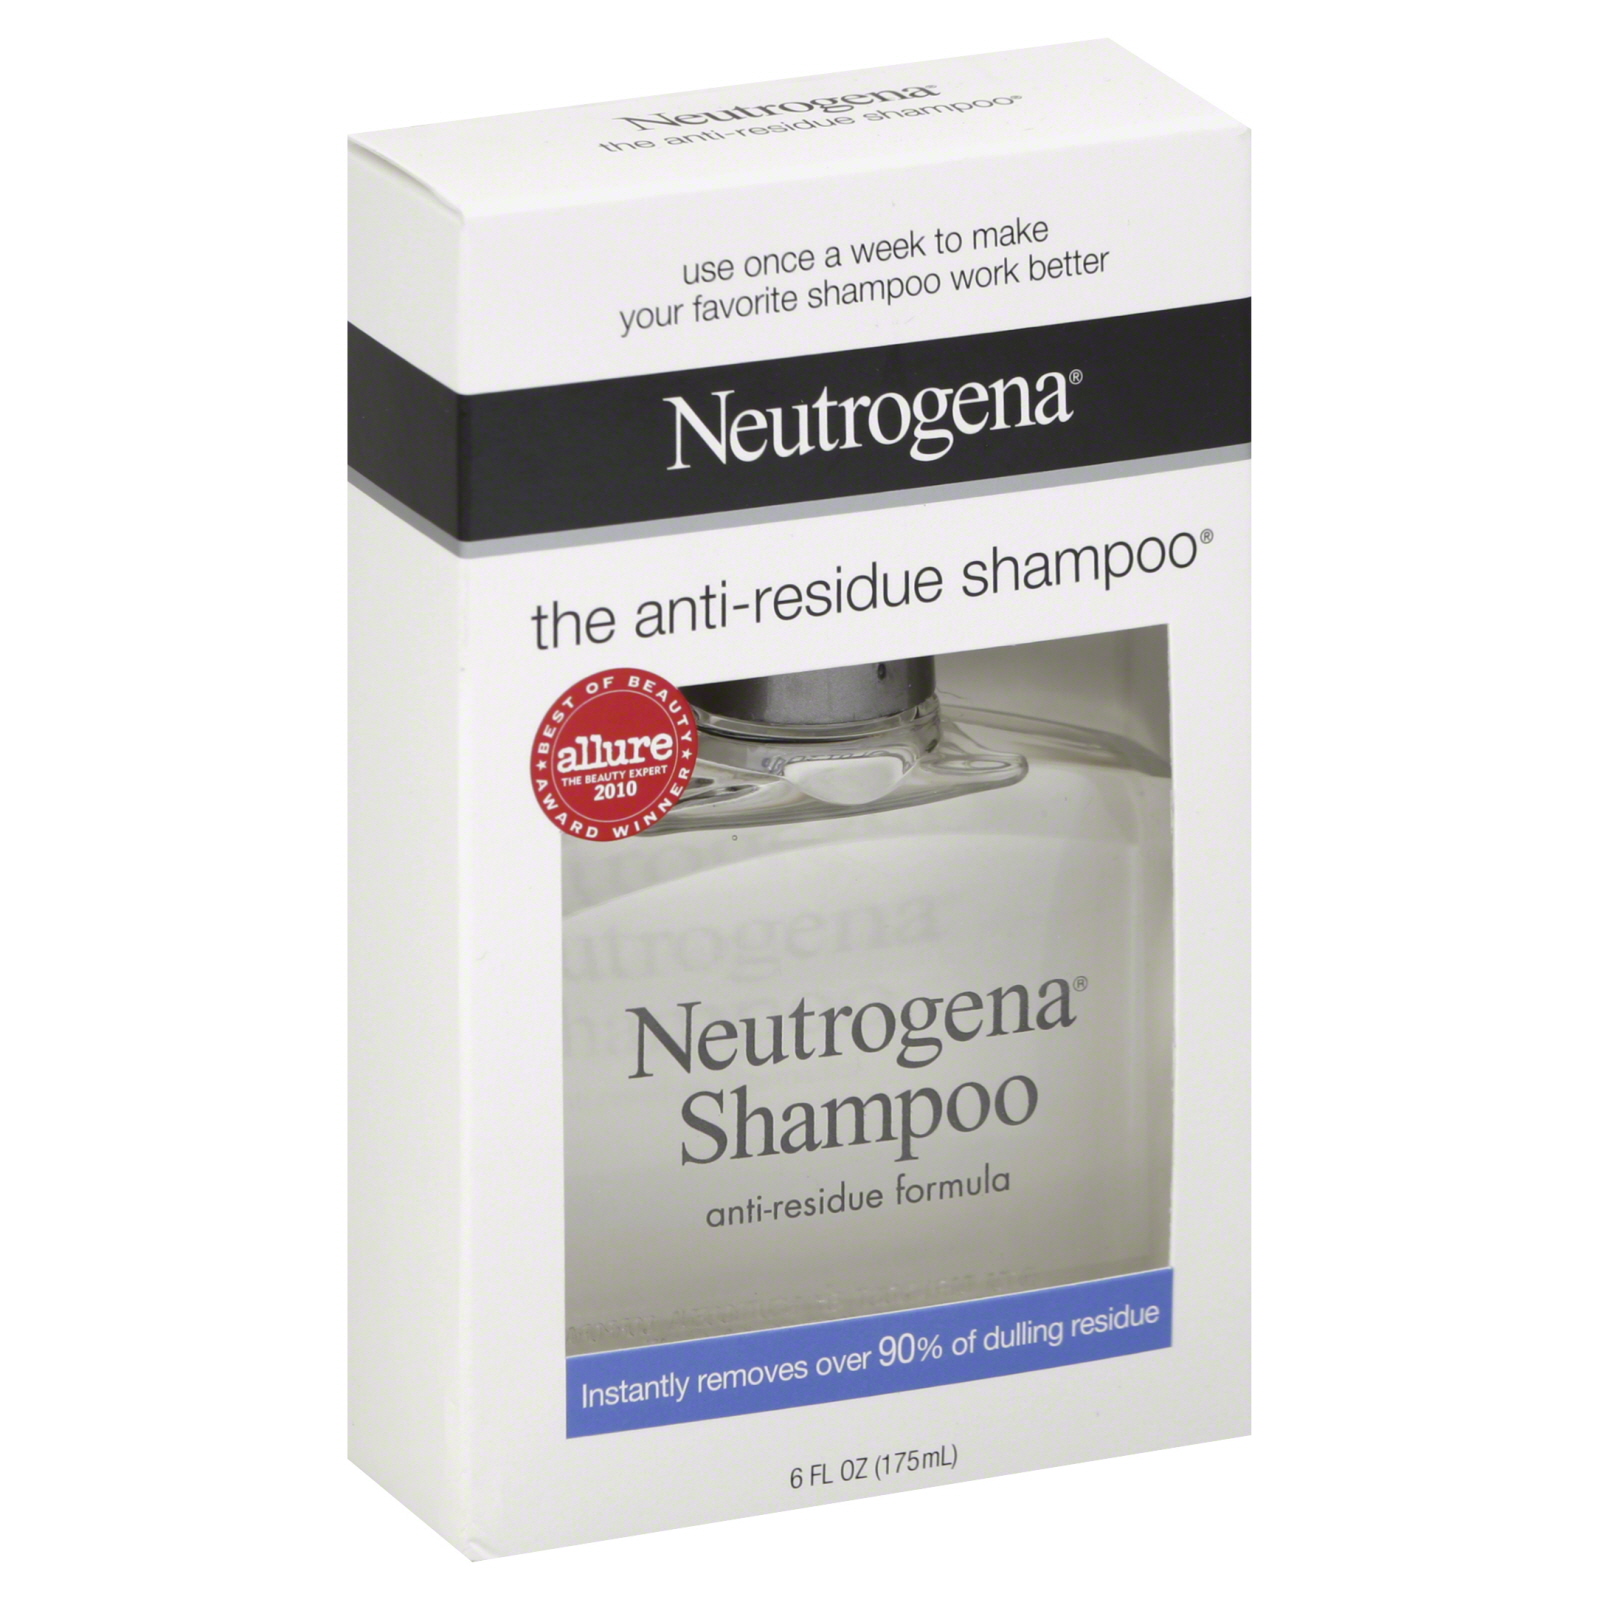 Neutrogena Shampoo, Anti-Residue Formula, 6 fl oz (175 ml)